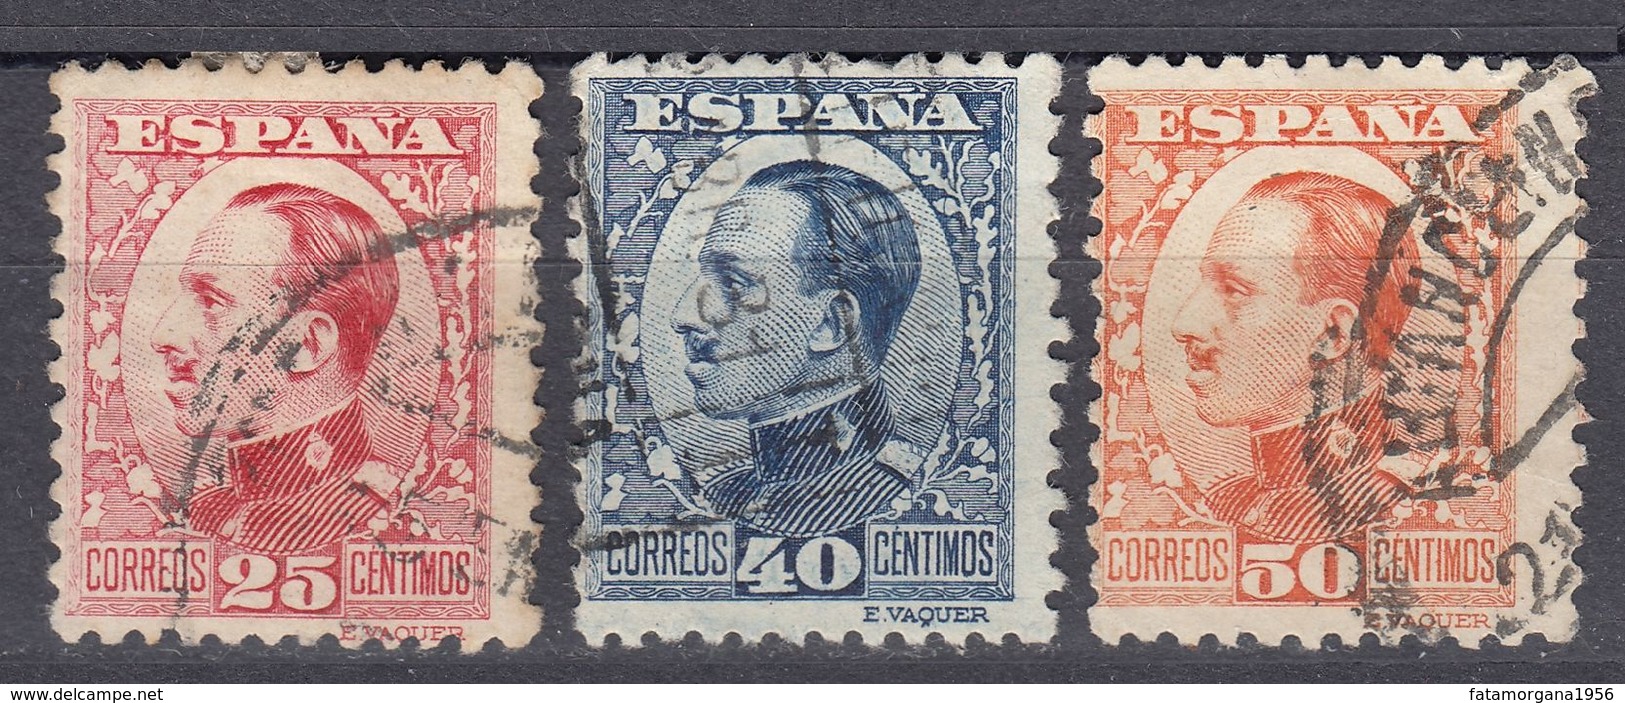 ESPAÑA - SPAGNA - SPAIN - ESPAGNE - 1930/1931 - Lotto Di 3 Valori Usati: Yvert 409, 410 E 411. - Usados